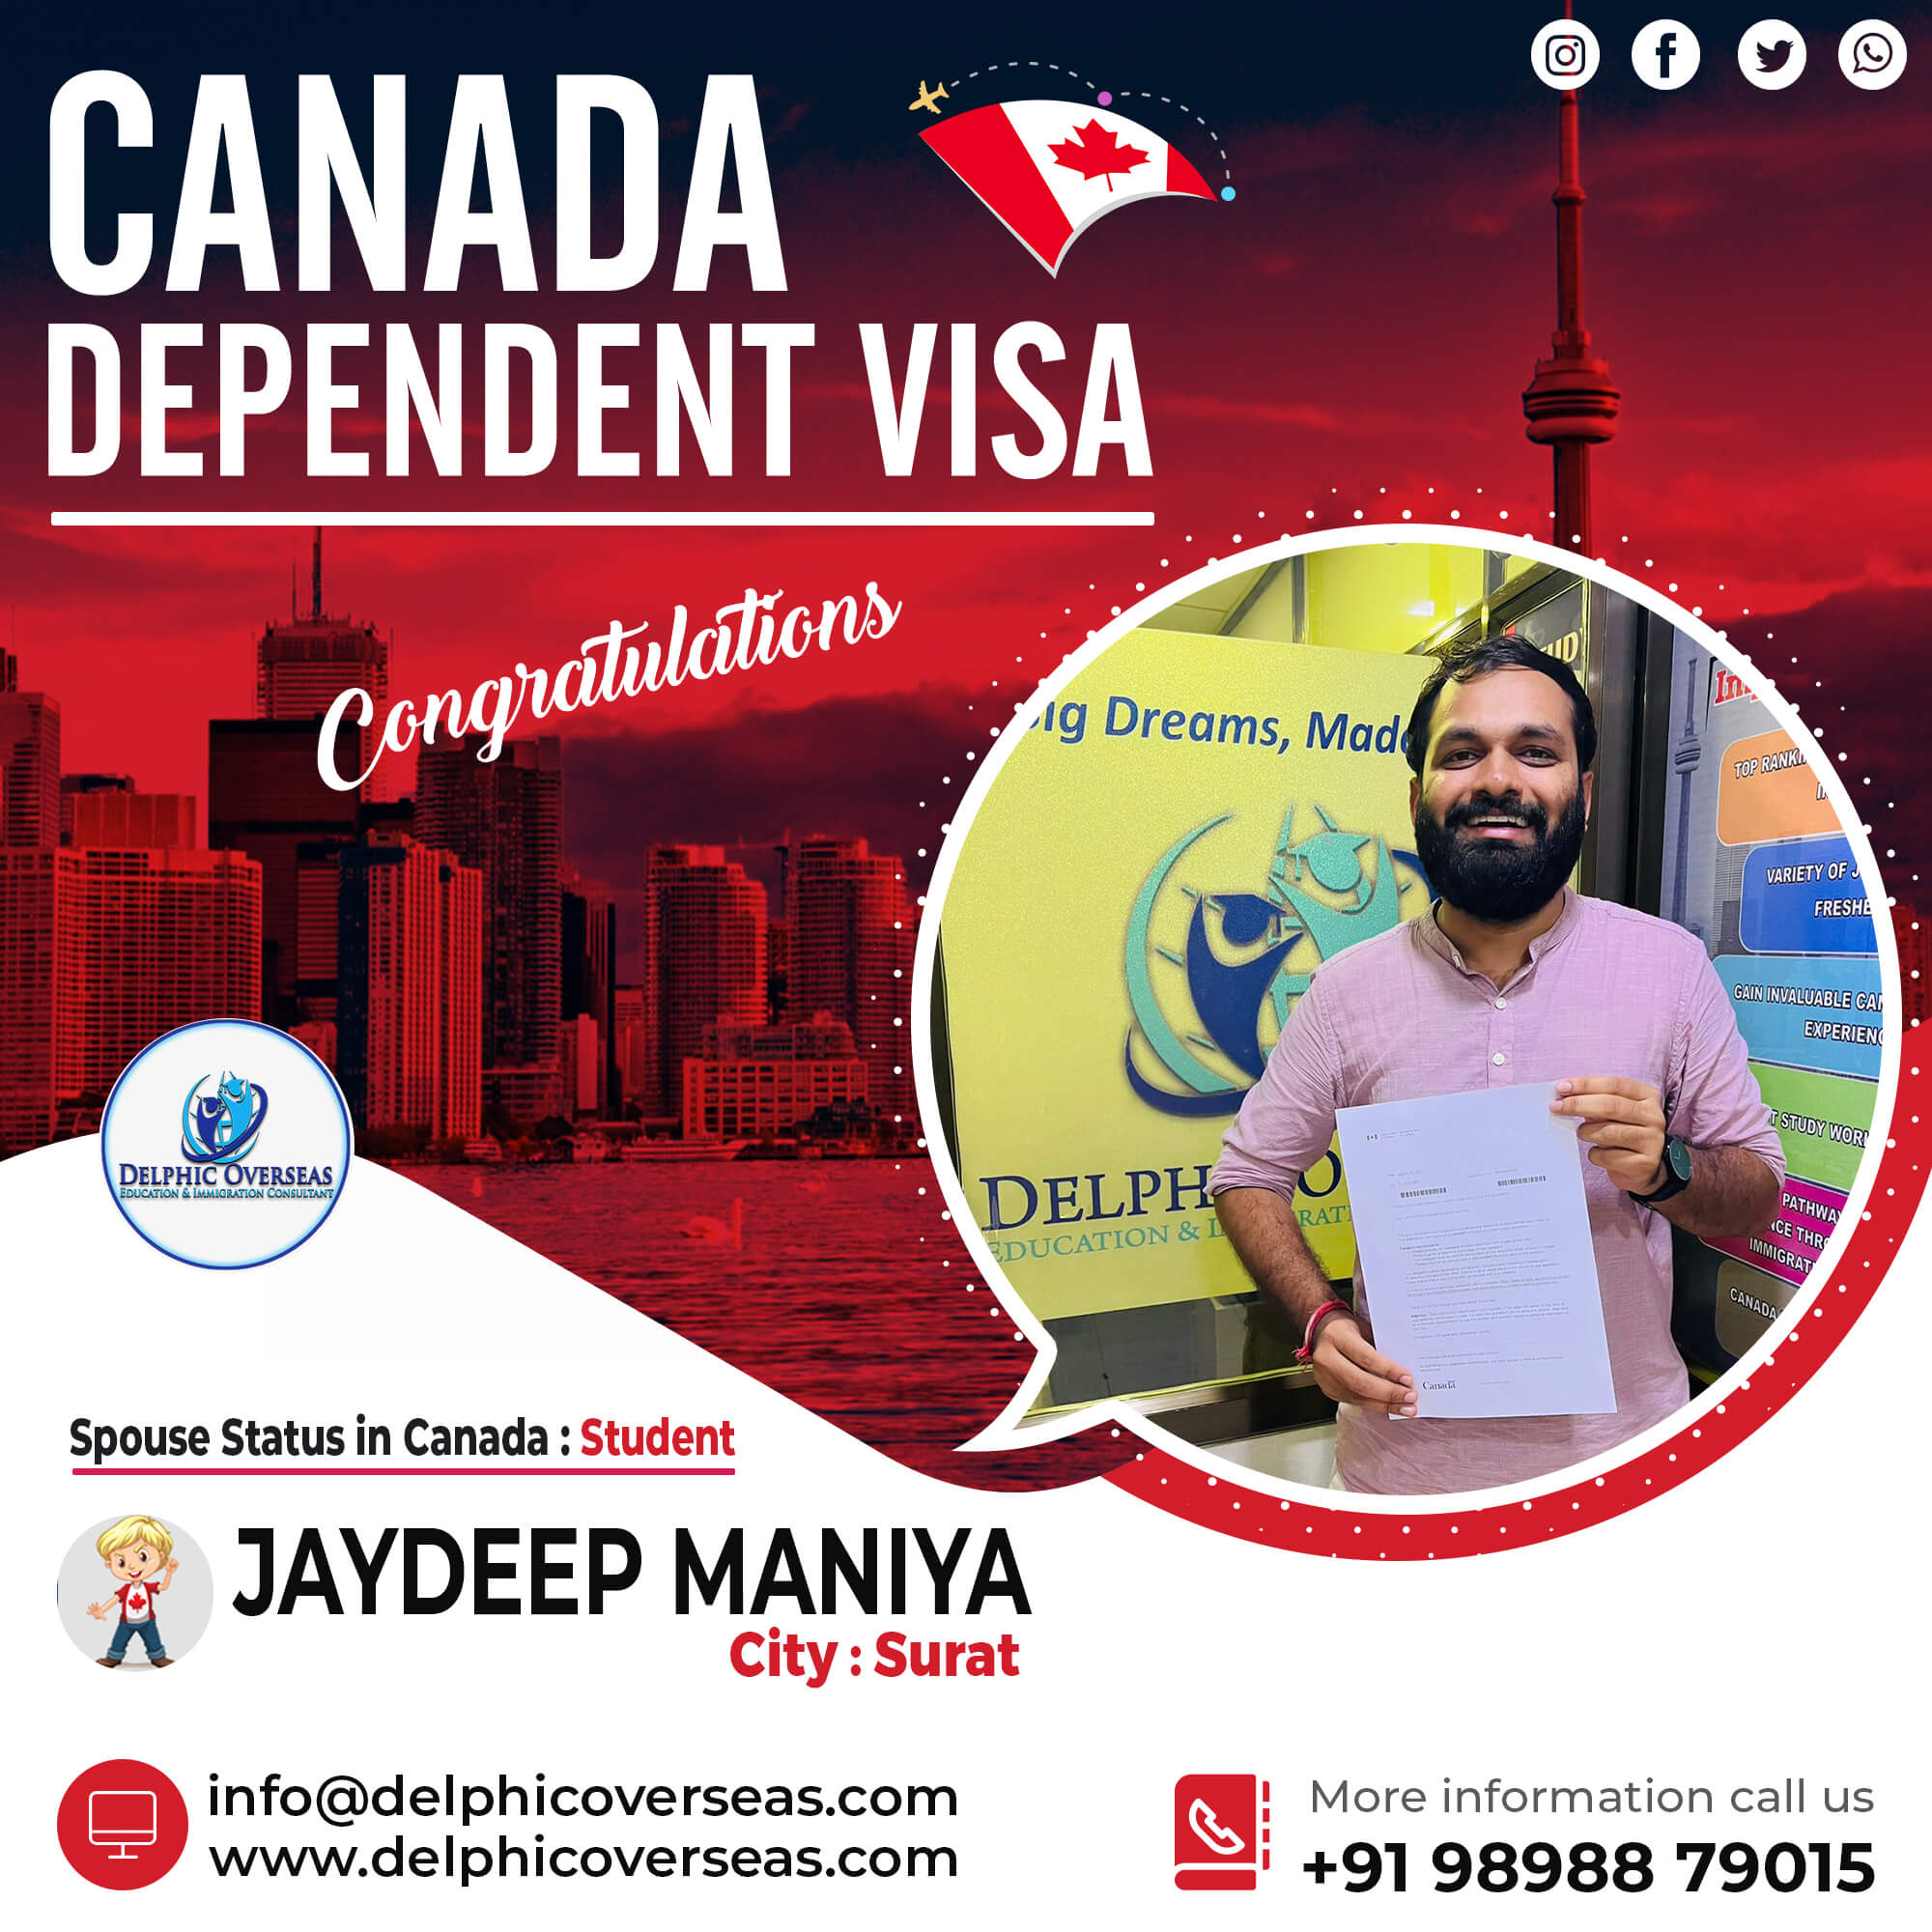 Jaydeep Maniya Canada Dependent Visa Success Story